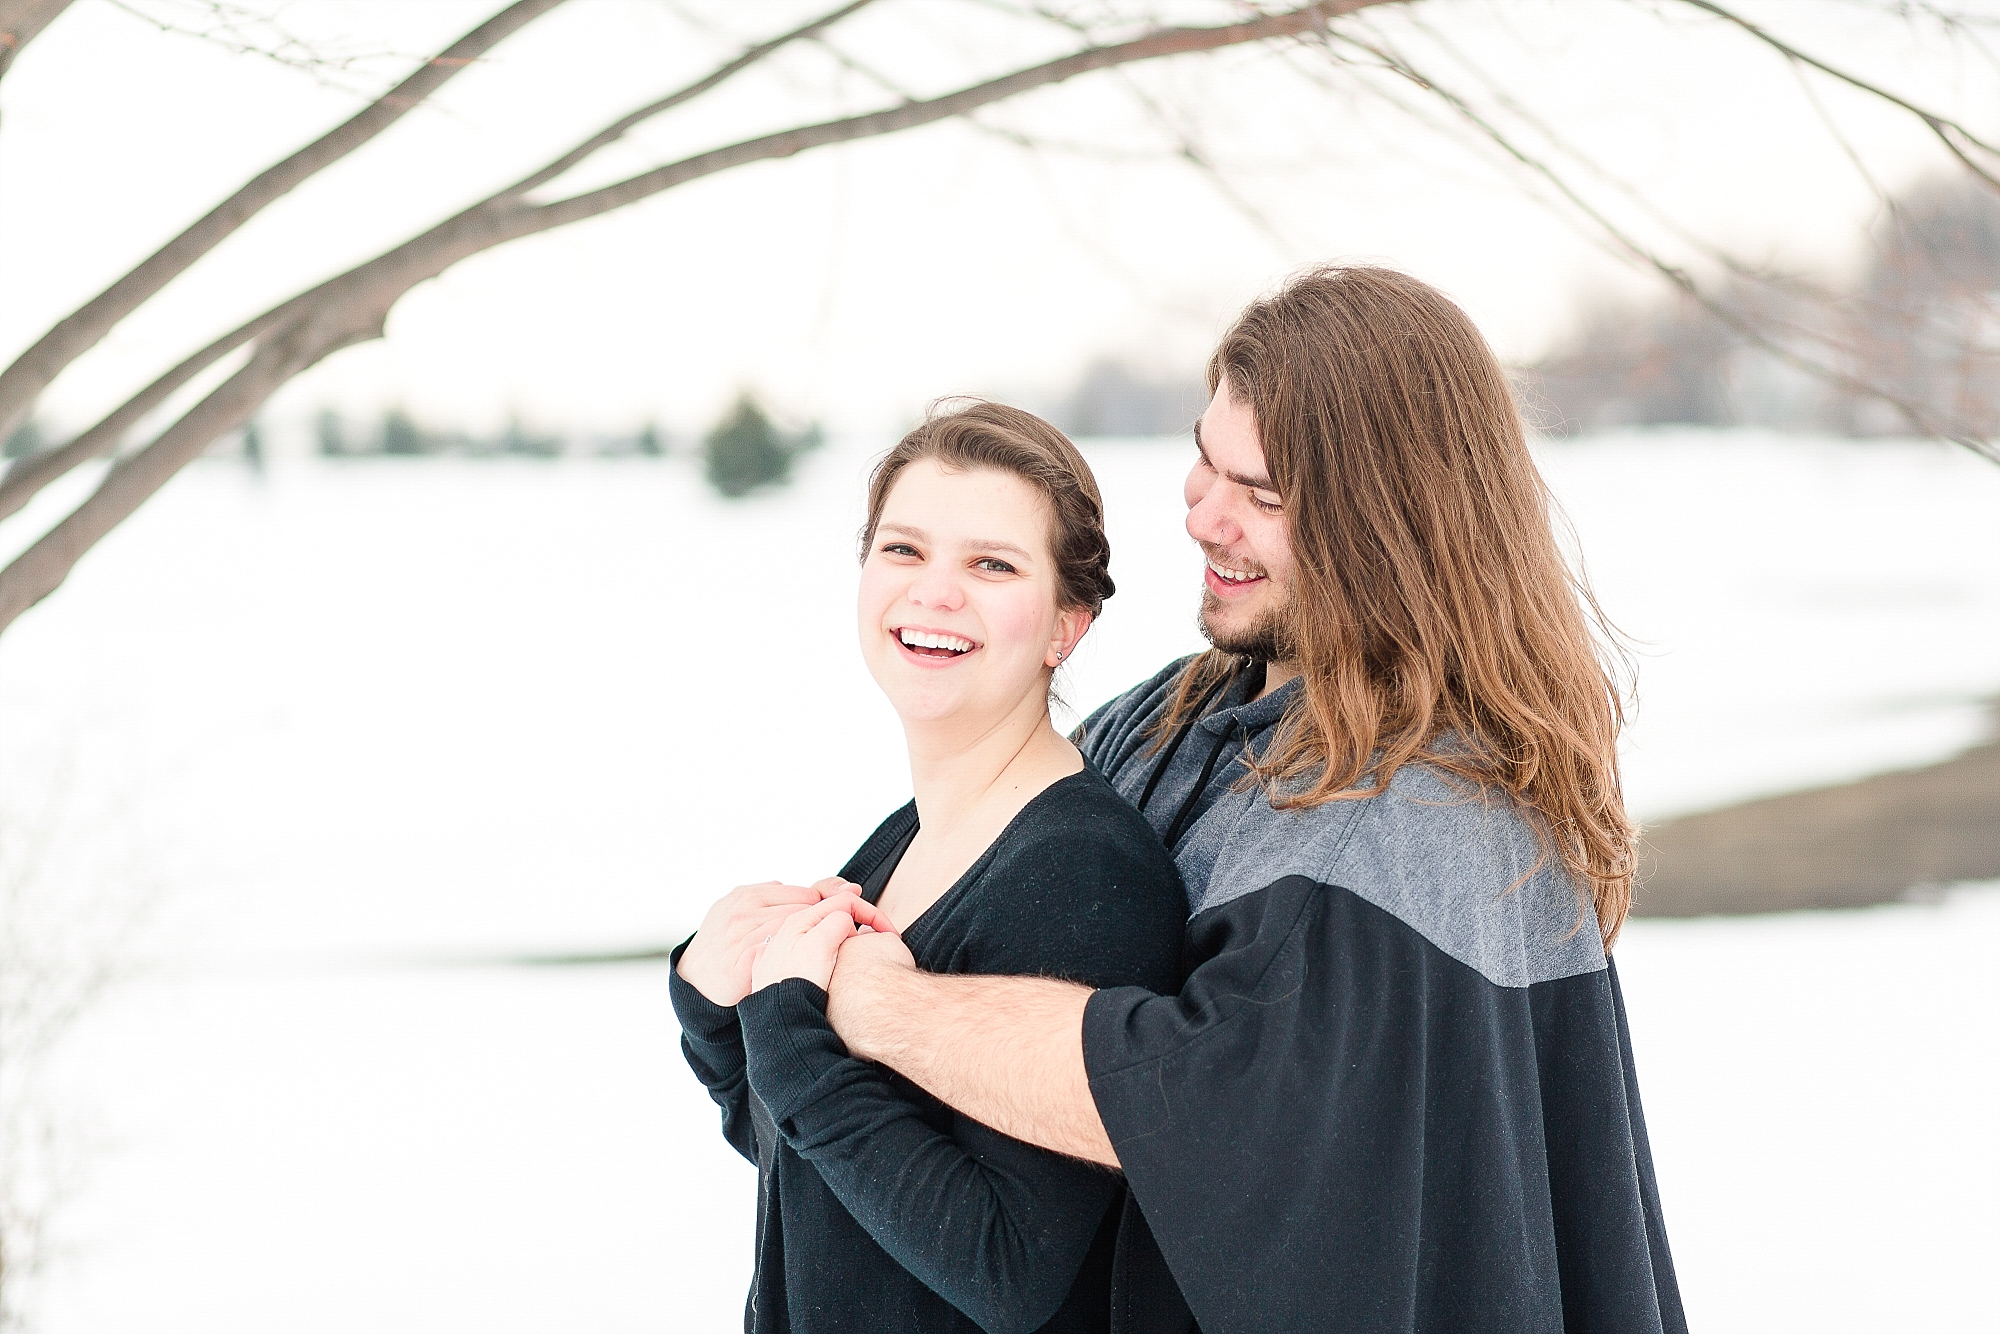 Smiling engagement photos in winter wonderland